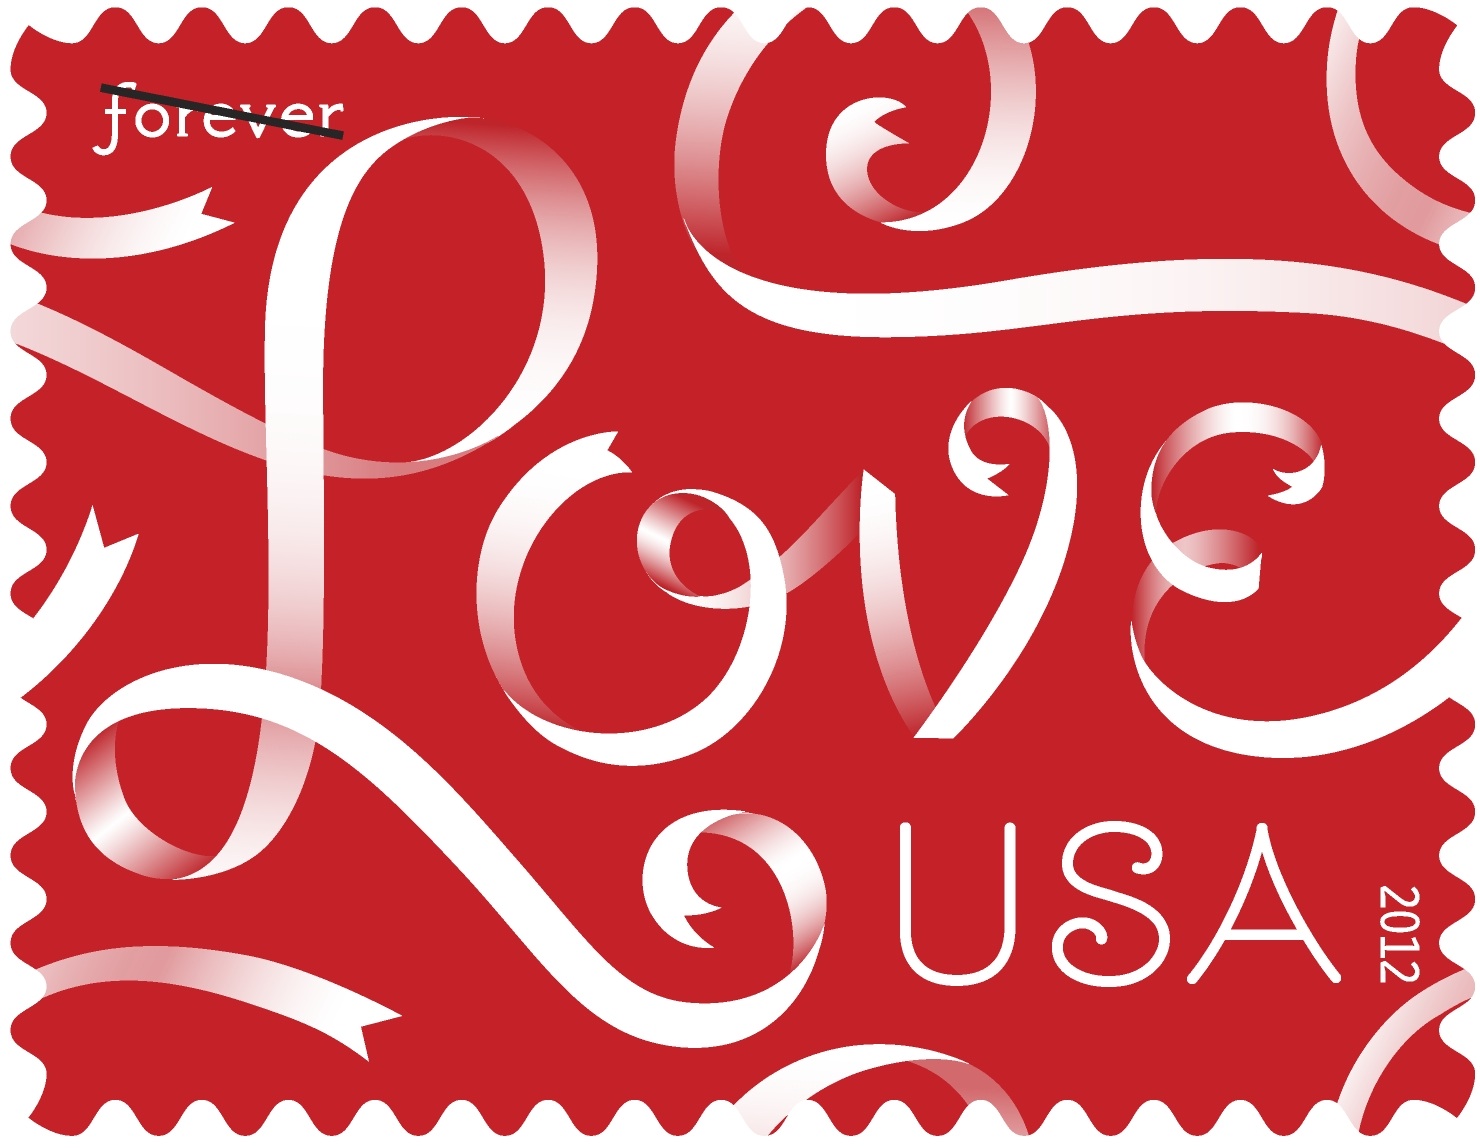 love stamp